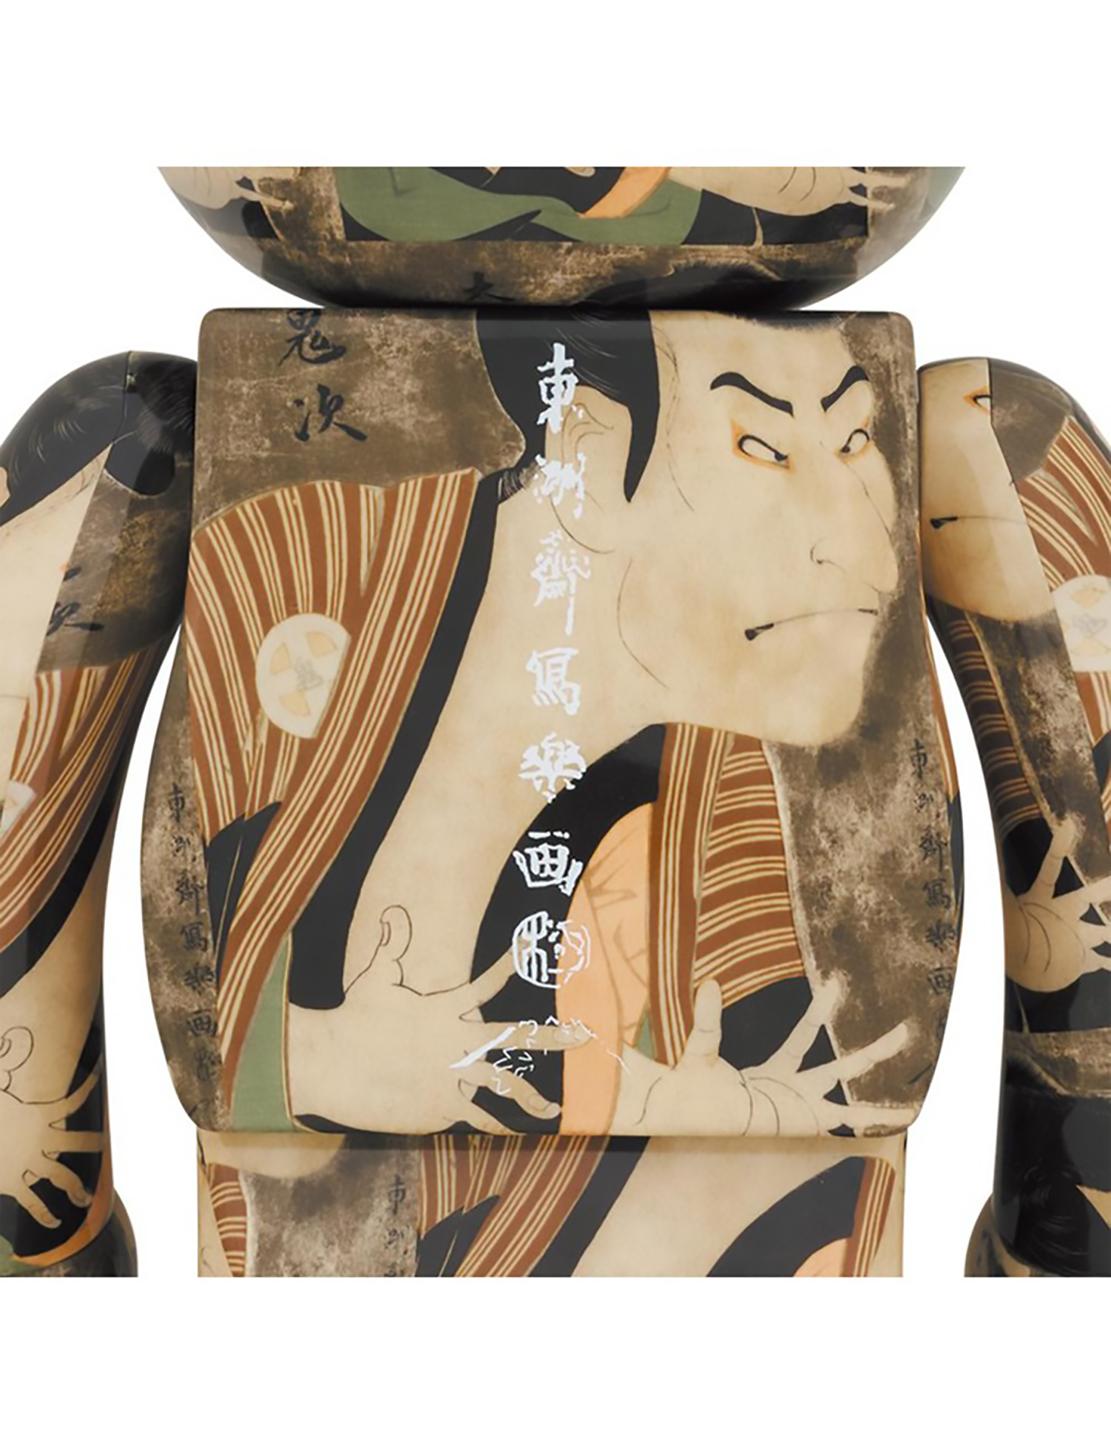 Toshusai Sharaku Bearbrick 400% art toy (Toshusai Sharaku Be@rbrick) - Pop Art Sculpture by Unknown